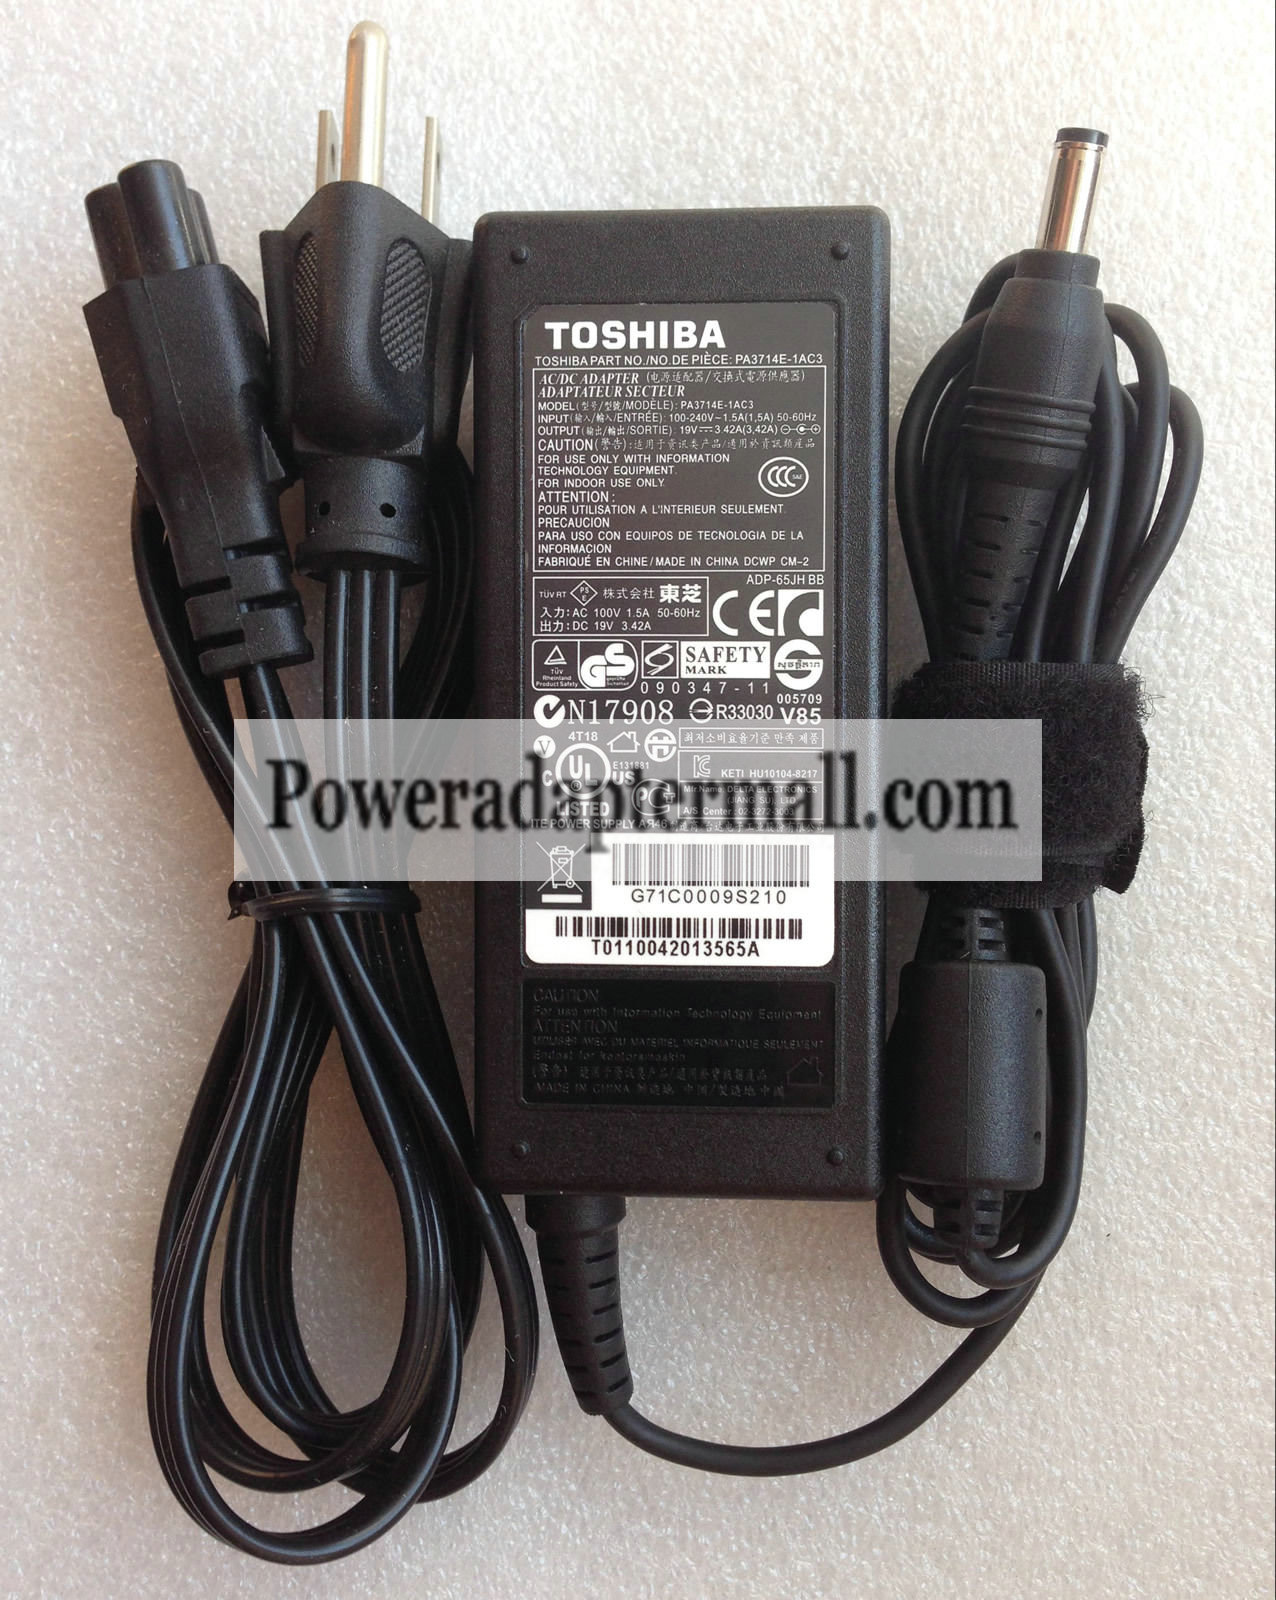 Toshiba PA3714E-1AC3 19V 3.42A 65W AC Adapter Cord/Charger